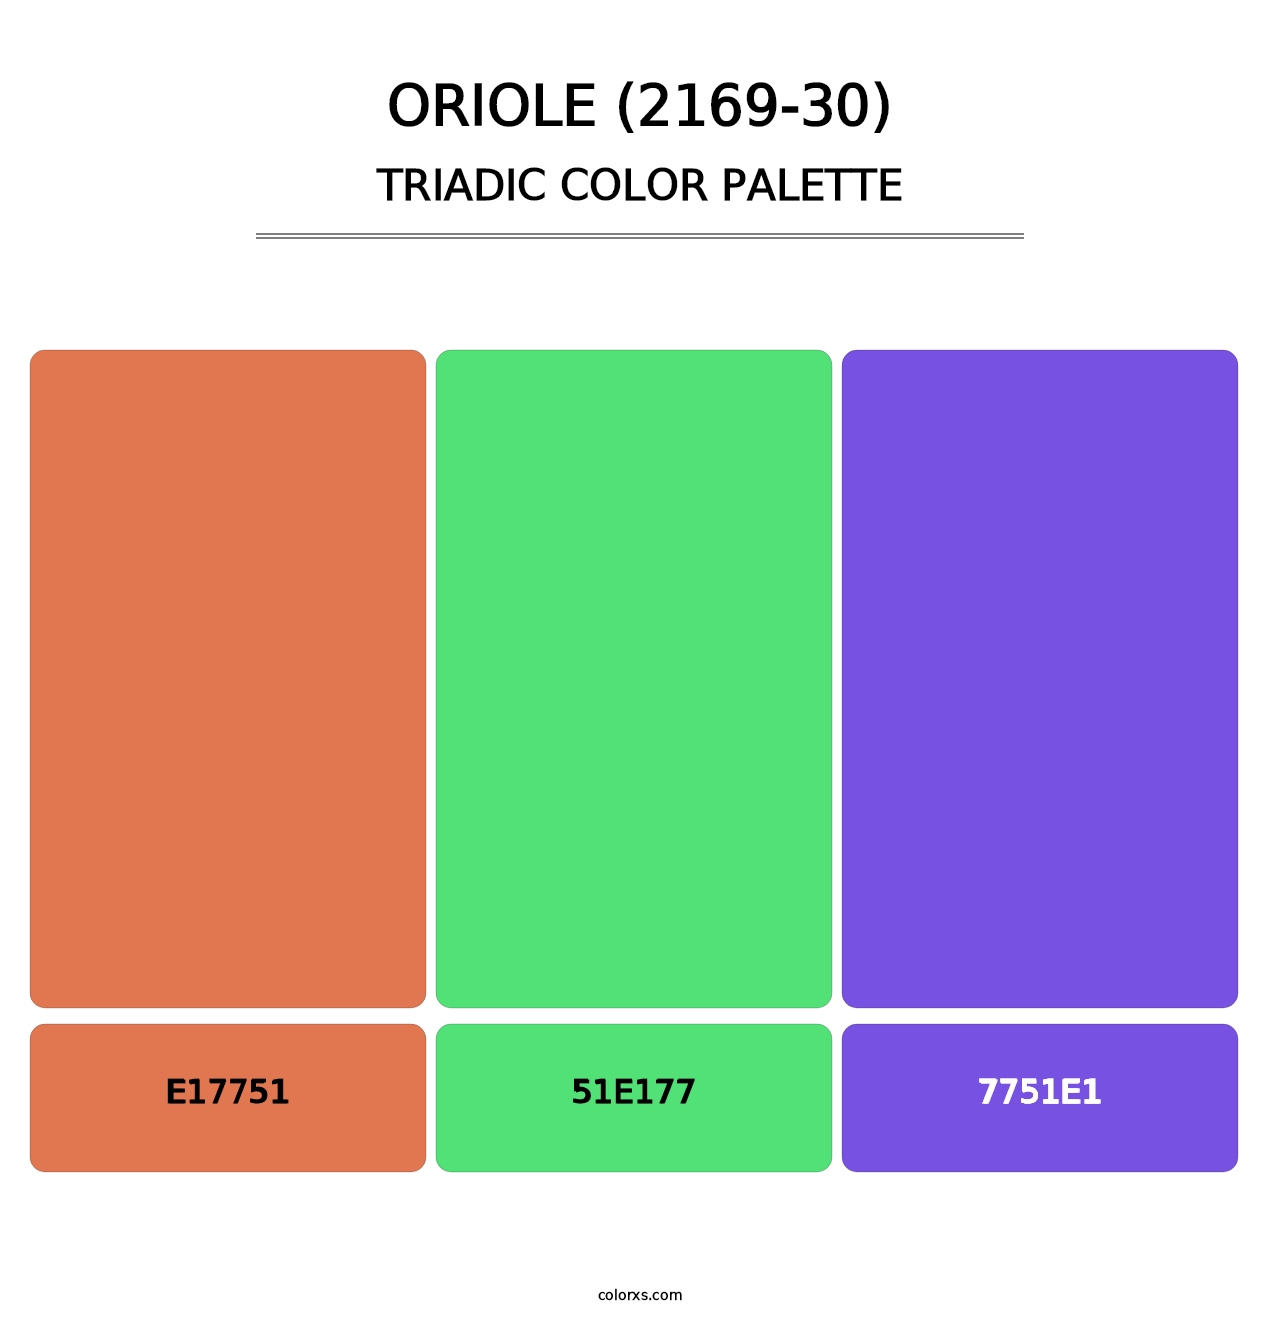 Oriole (2169-30) - Triadic Color Palette